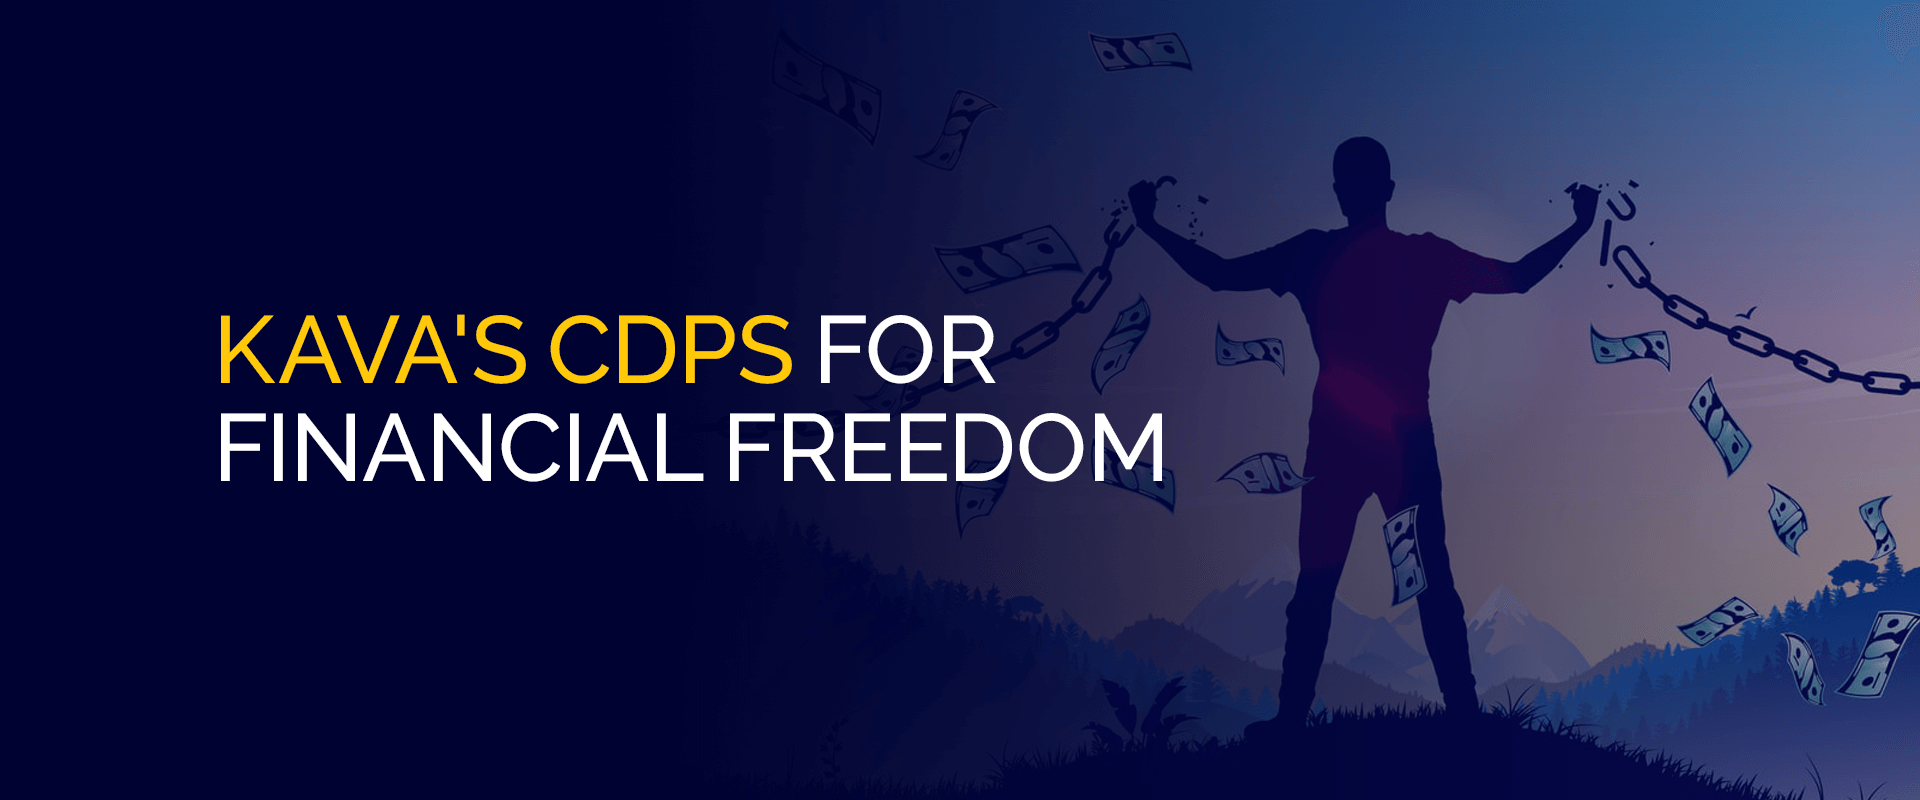 Kava's CDPs for Financial Freedom